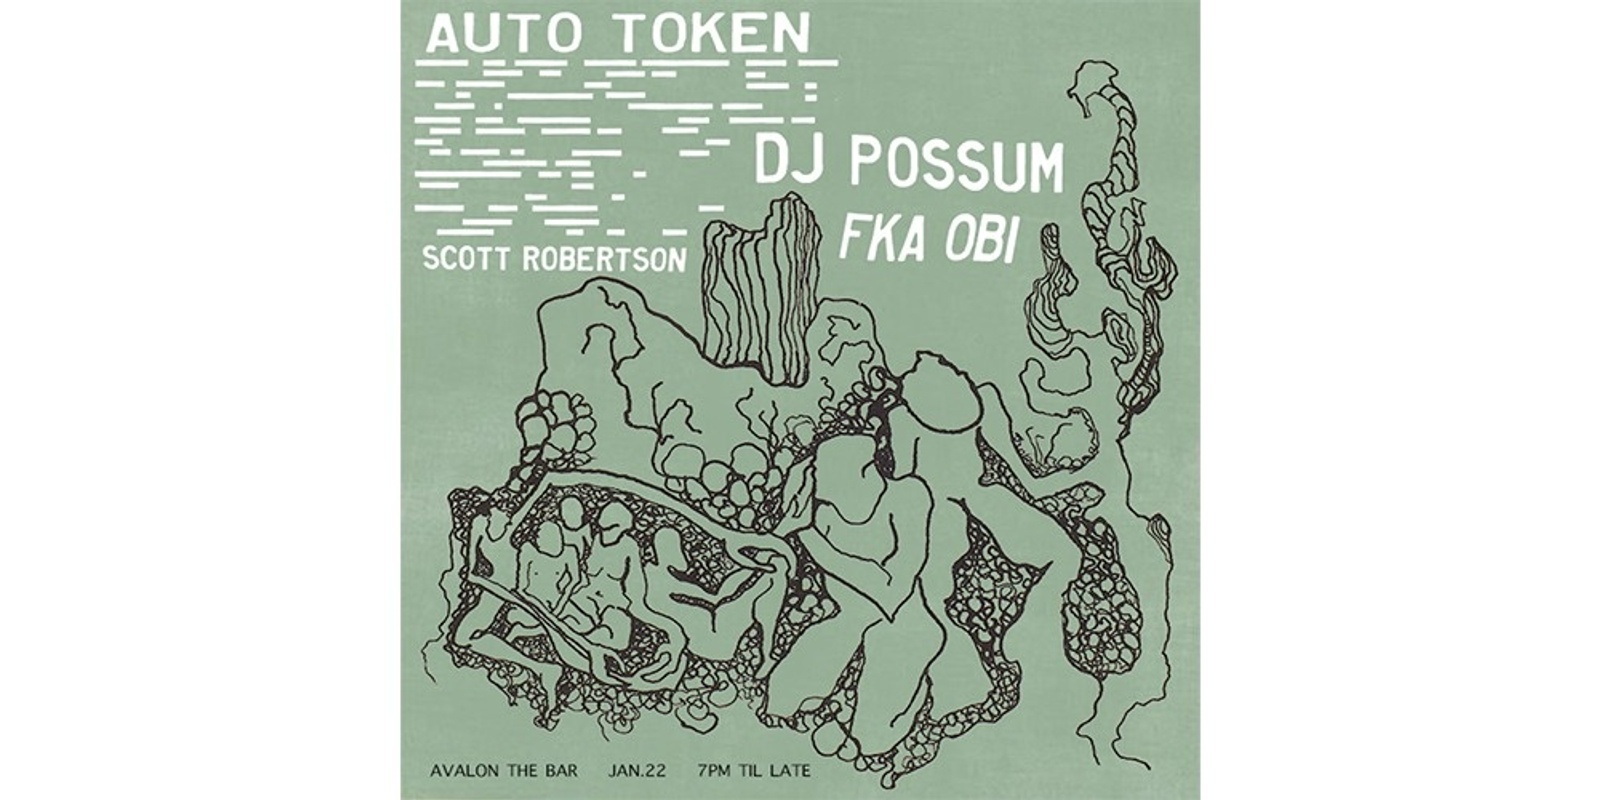 Banner image for Auto Token w/ DJ Possum, Fka Obi & Scott Robertson